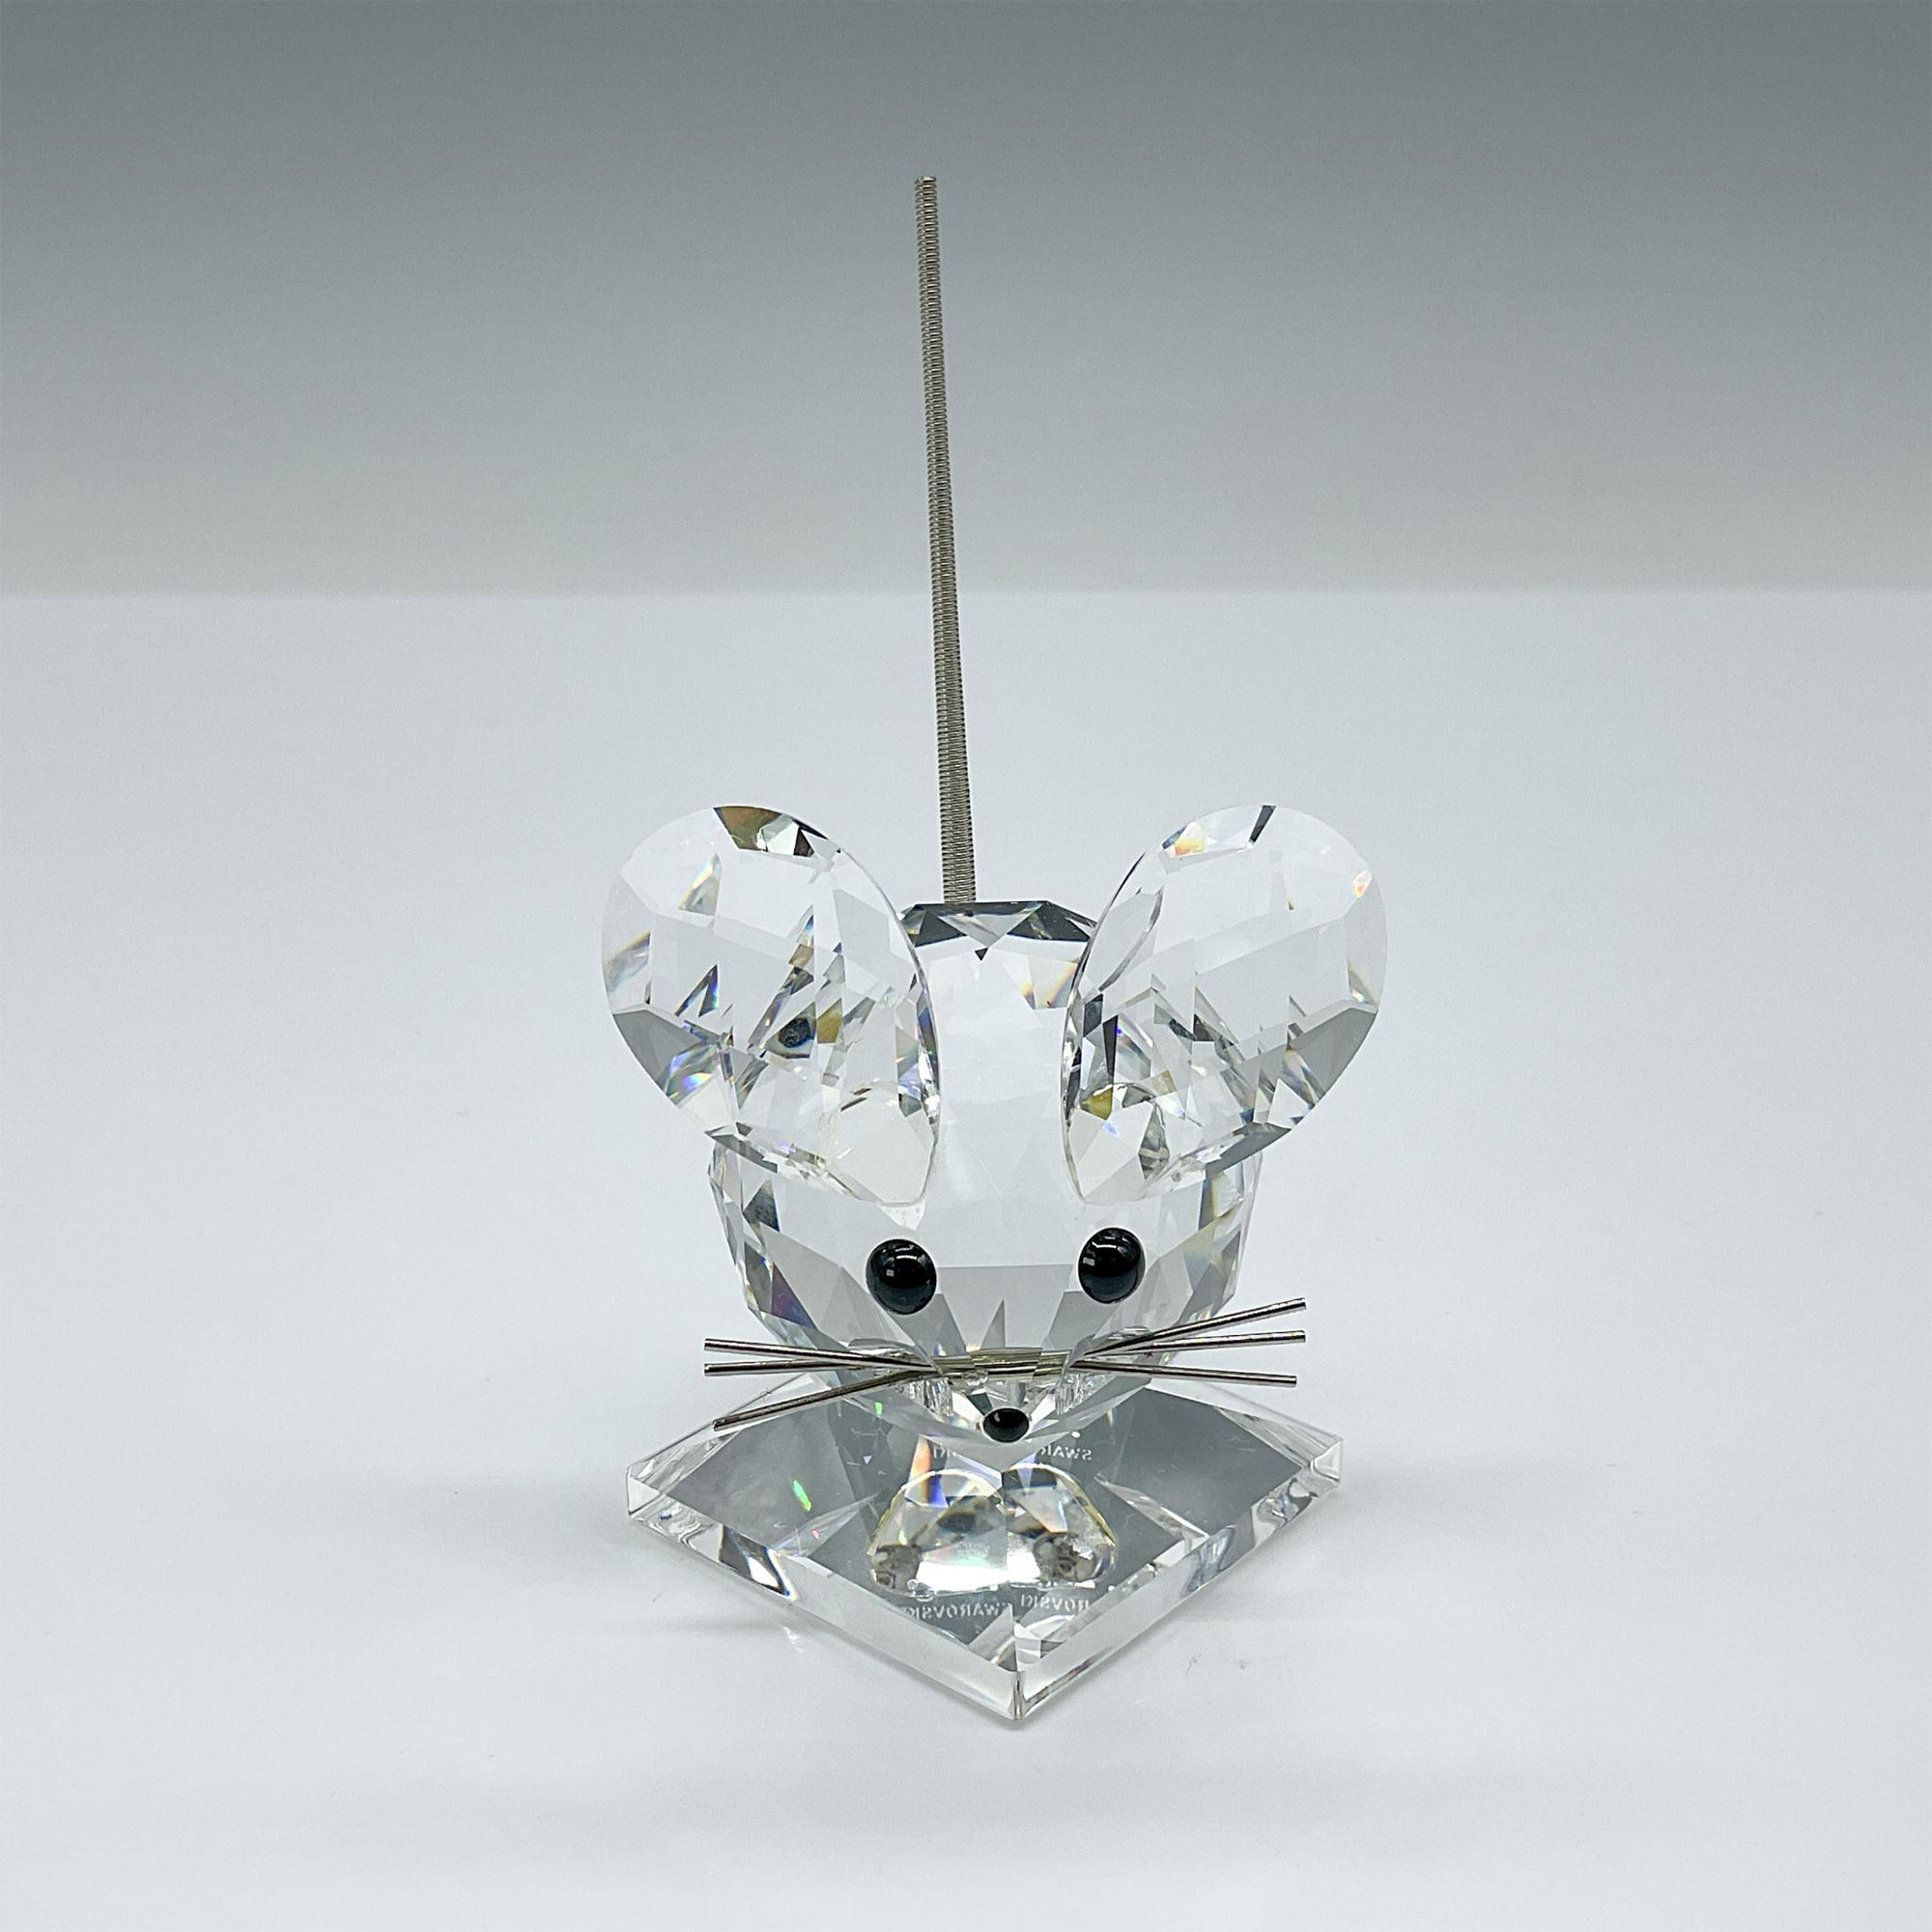 Swarovski Crystal Figurine, Mouse King - Image 2 of 4